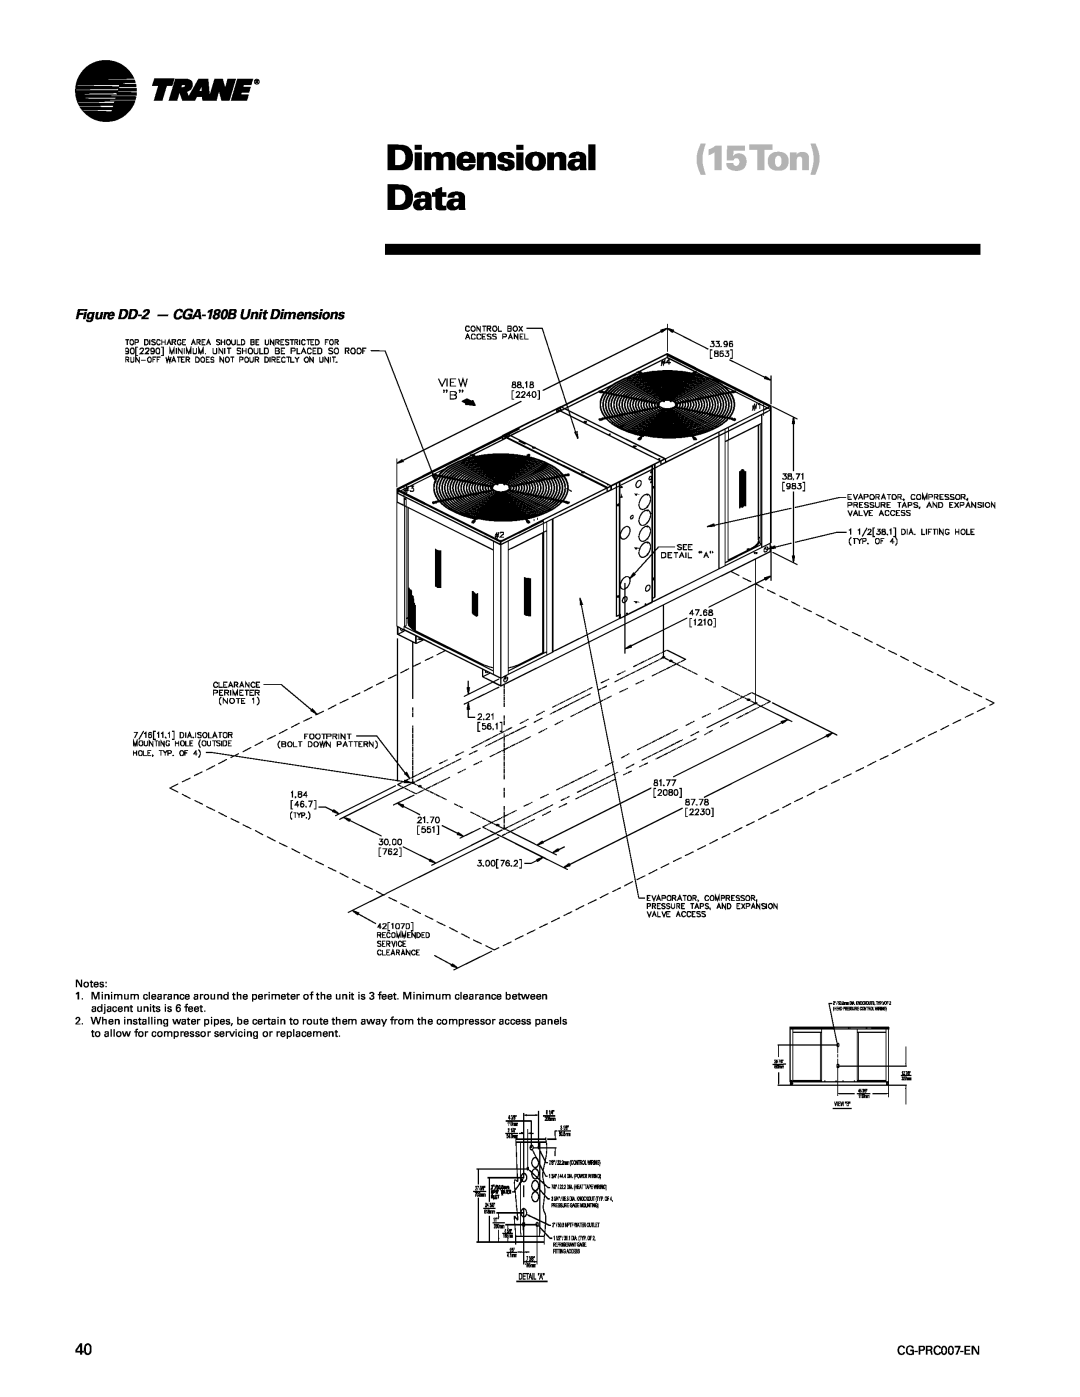 Trane CG-PRC007-EN manual Dimensional 15Ton Data, Figure DD-2- CGA-180BUnit Dimensions 